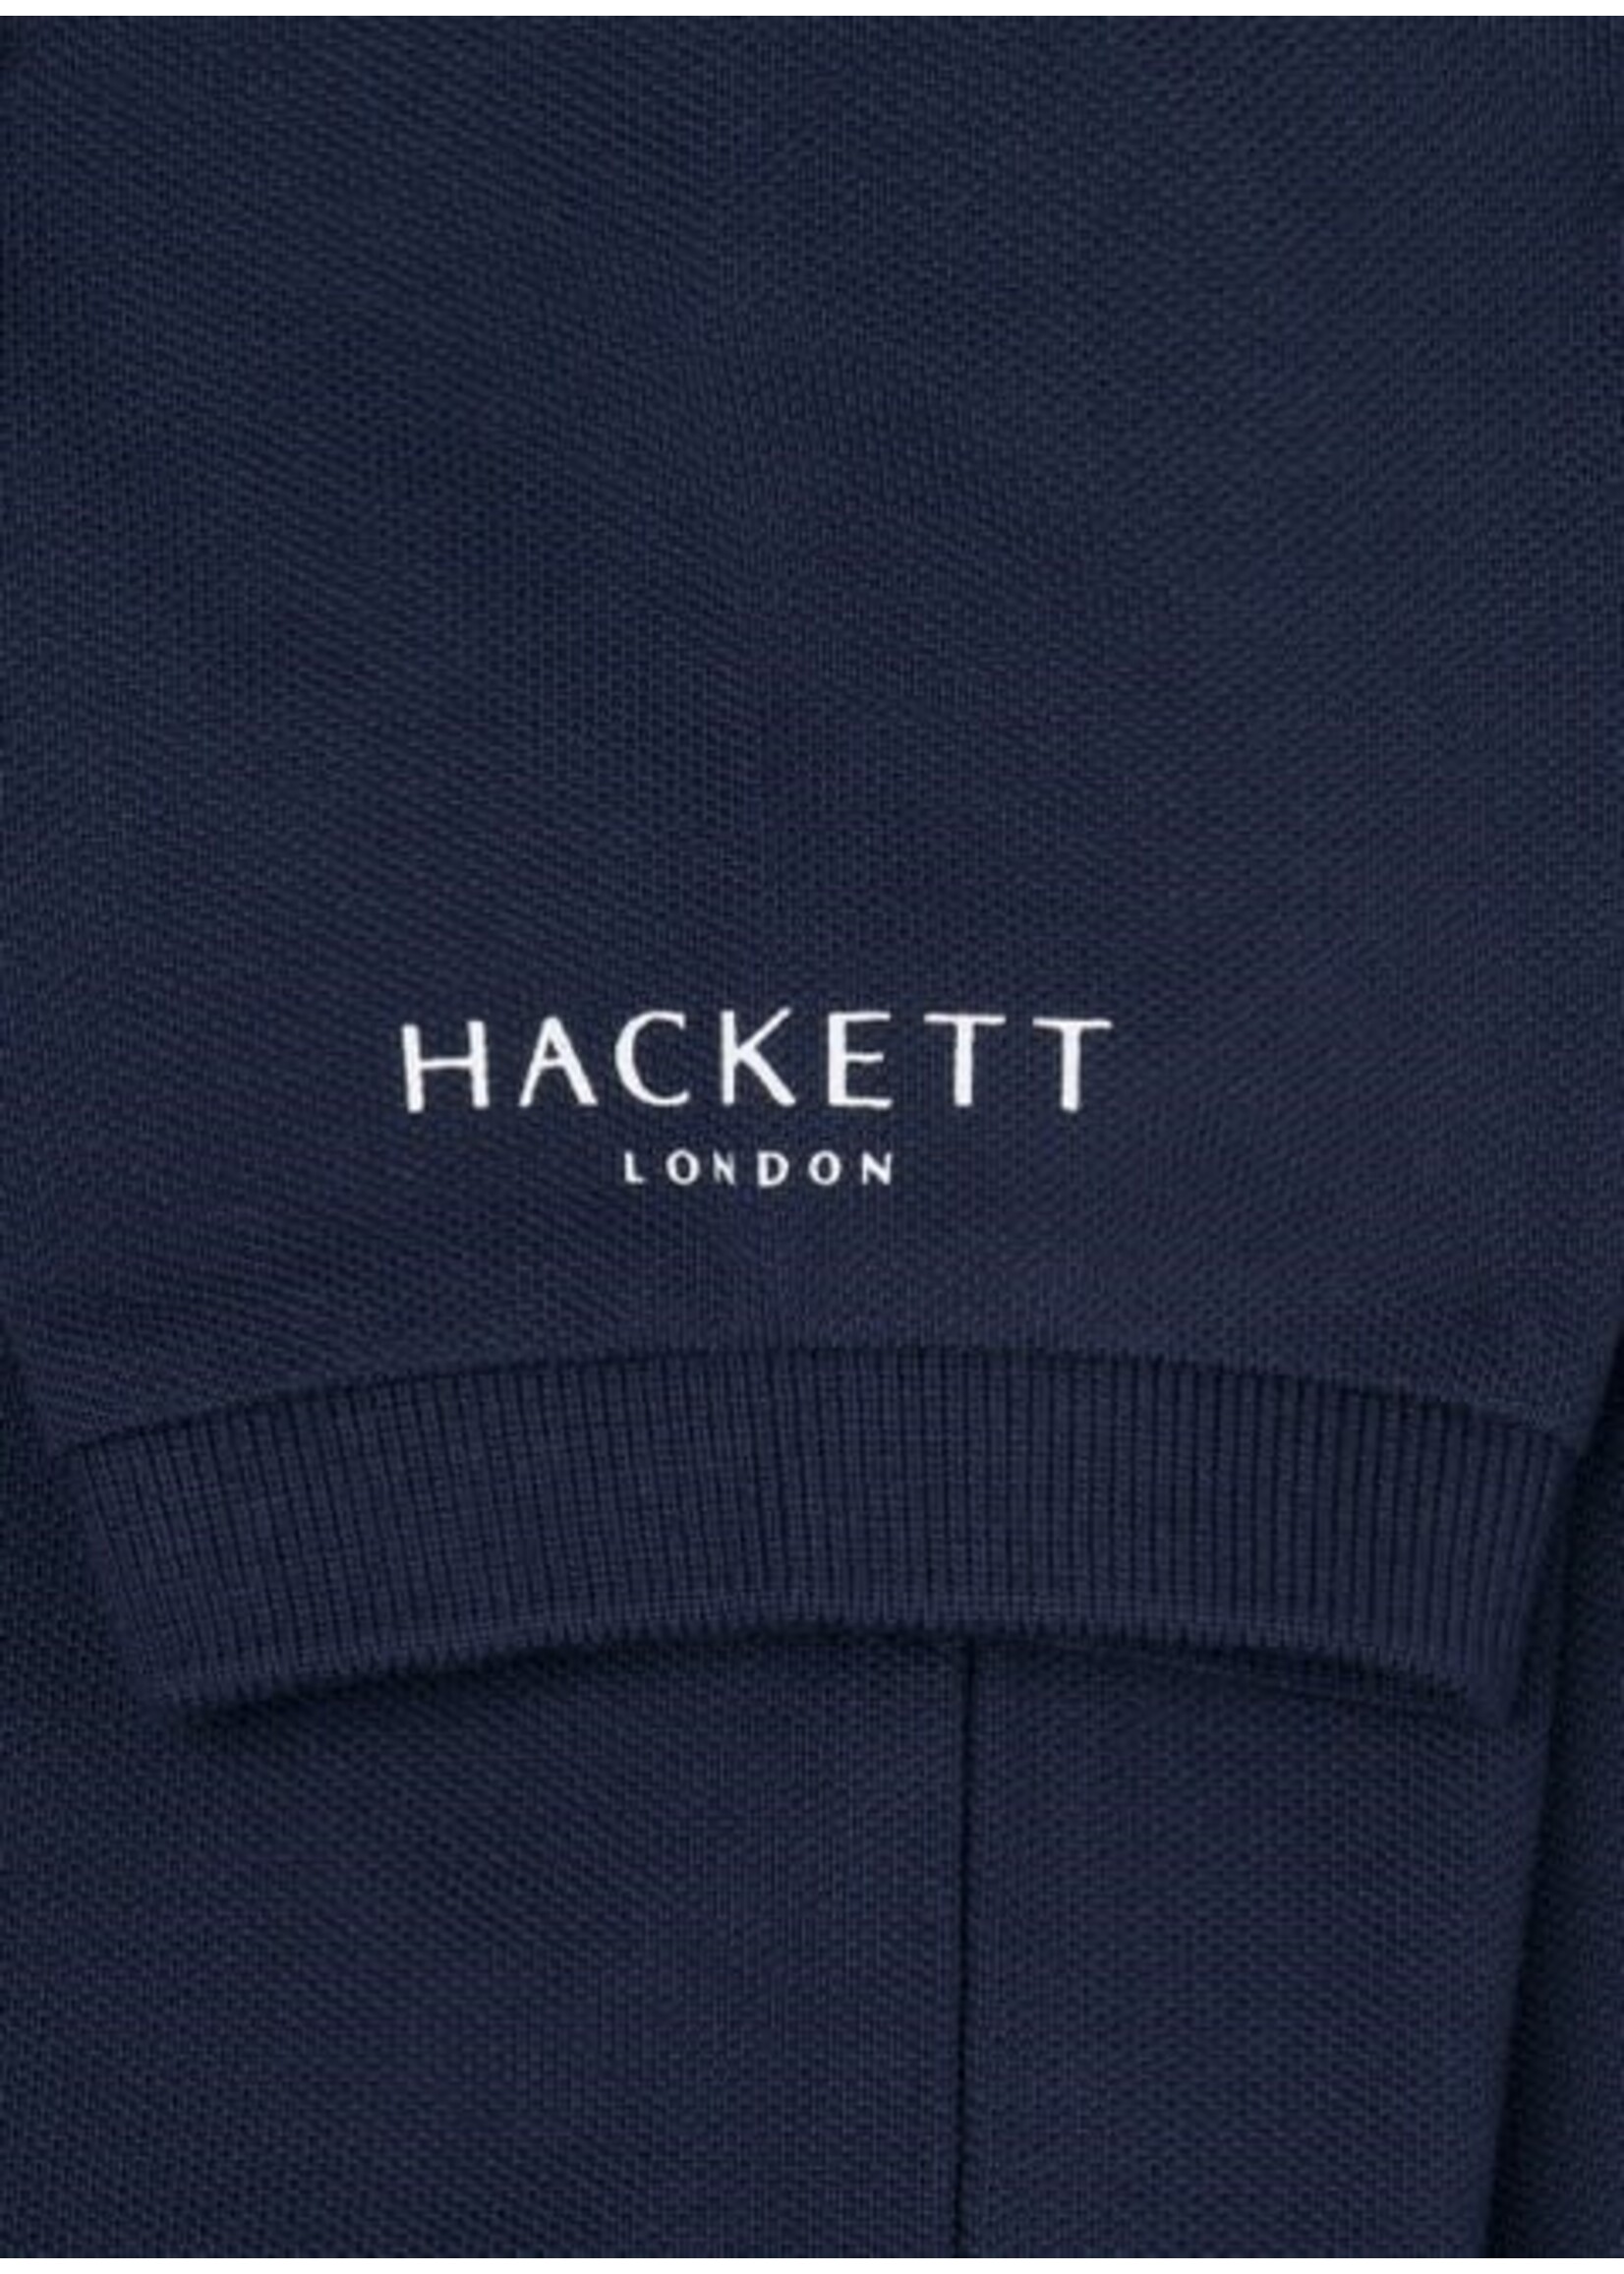 Hackett SMALL LOGO POLO 502OXFORD BLUE - HK561570